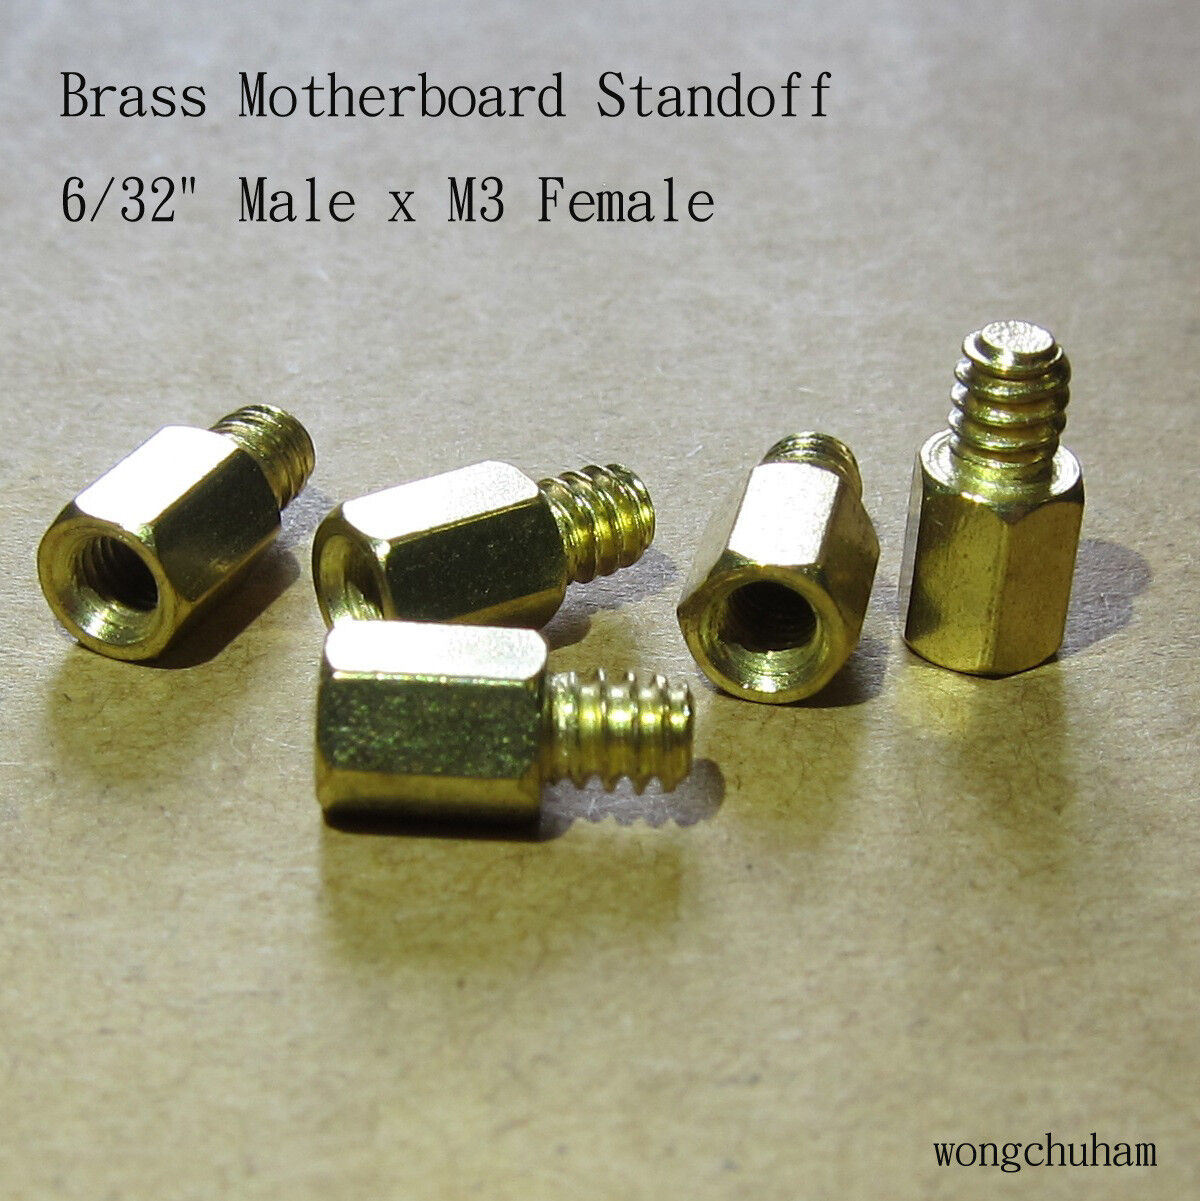 Brass motherboard standoff 6/32 male x M3 female - 25 pcs